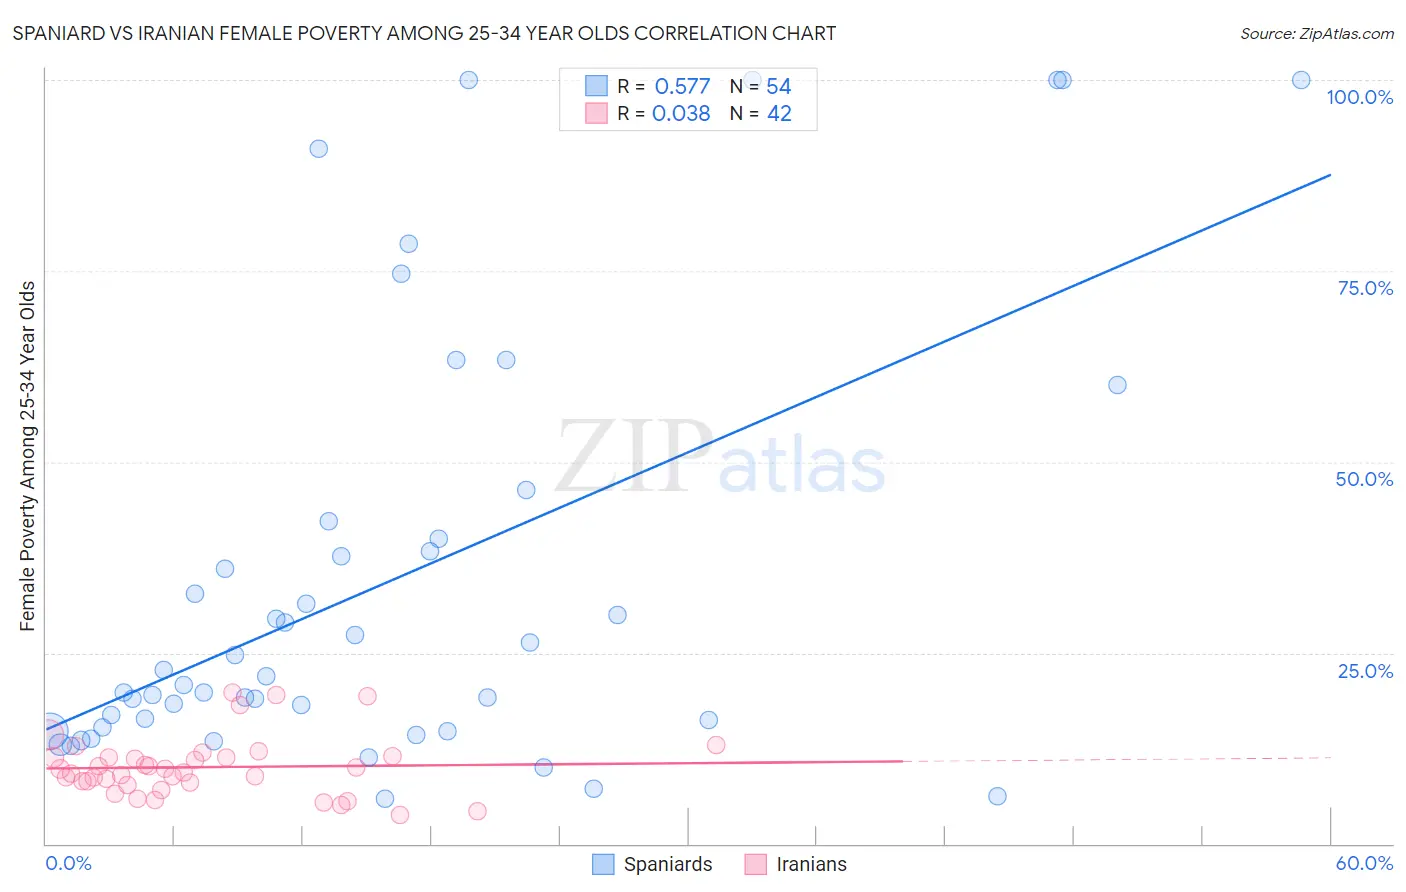 Spaniard vs Iranian Female Poverty Among 25-34 Year Olds